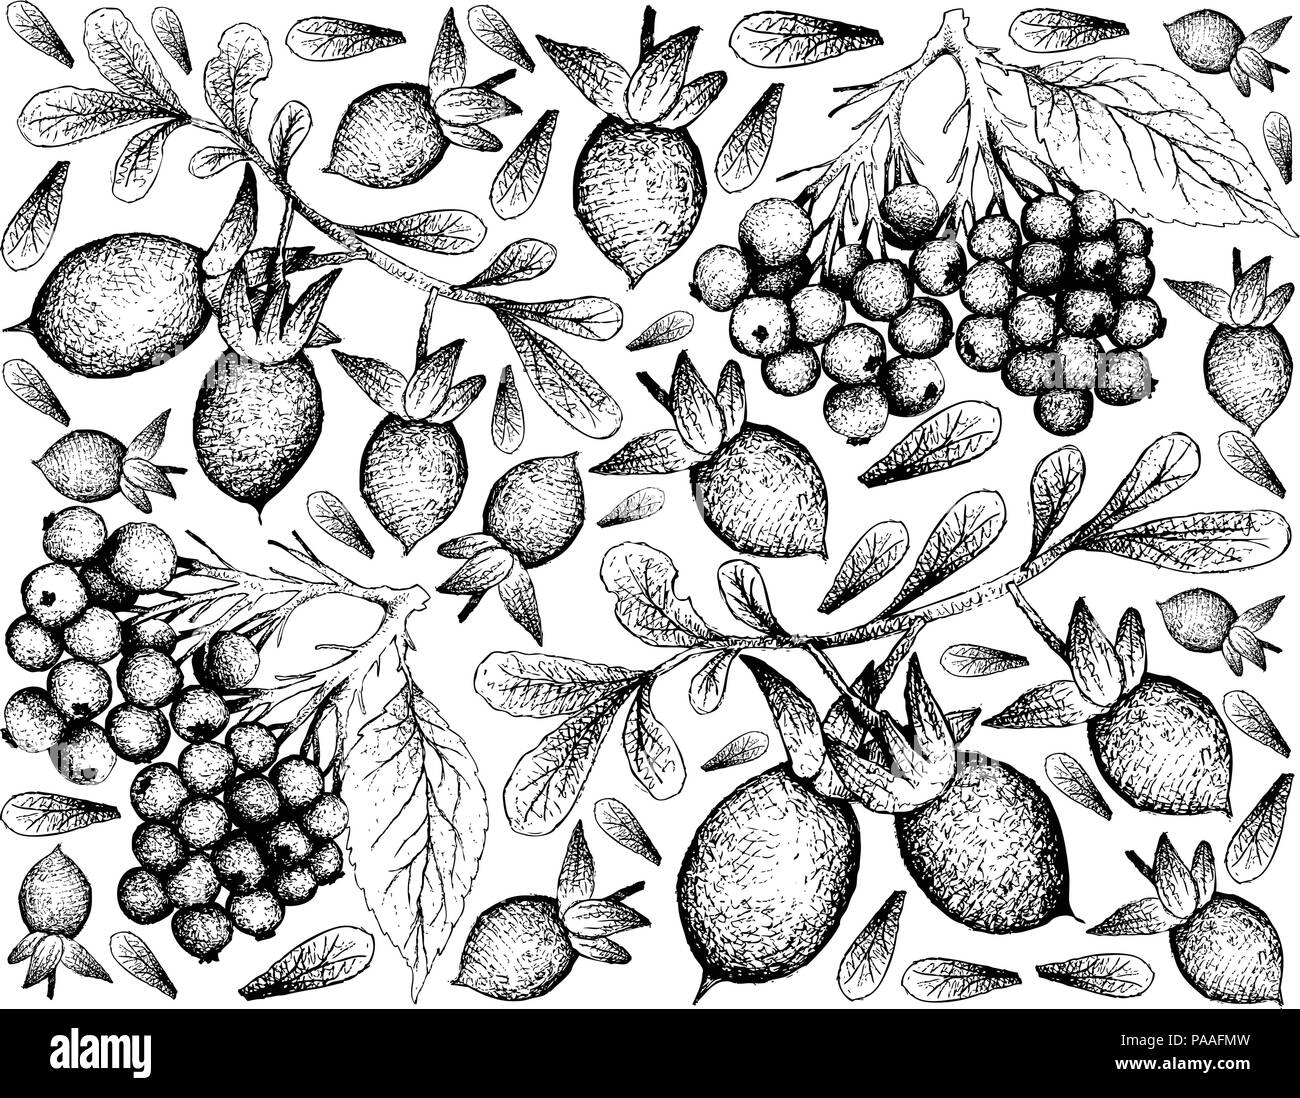 Berry Fruit, Illustration Hand Drawn Sketch of Elderberry or Sambucus Nigra and Elderberry or Sambucus Nigra Fruits Isolated on White Background. Stock Vector